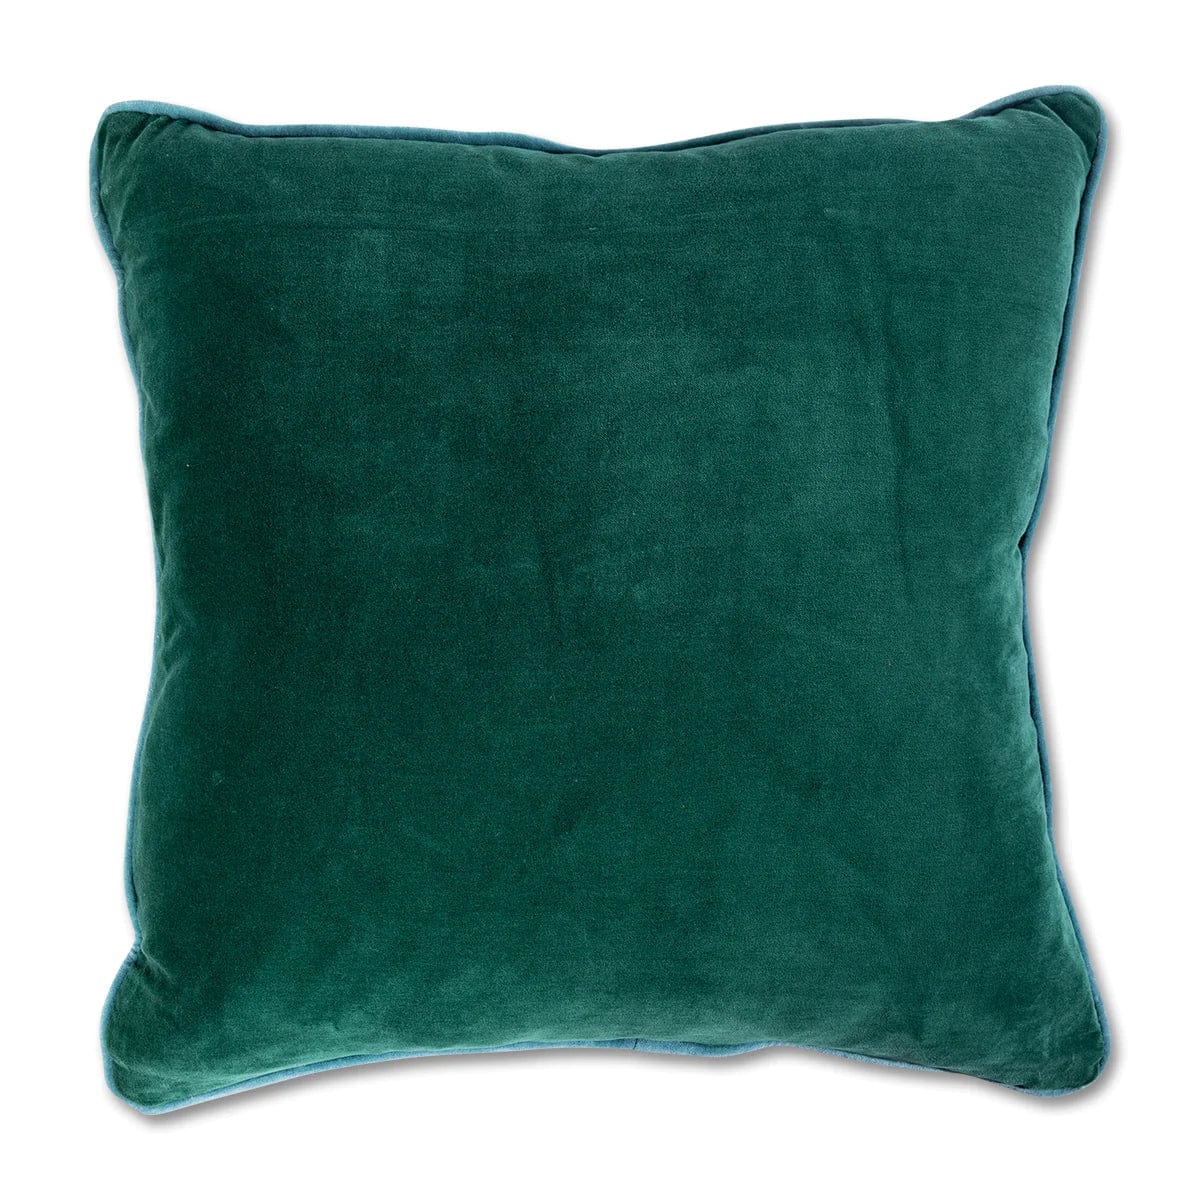 Furbish Charliss Cotton Velvet Pillow in Green and Aqua